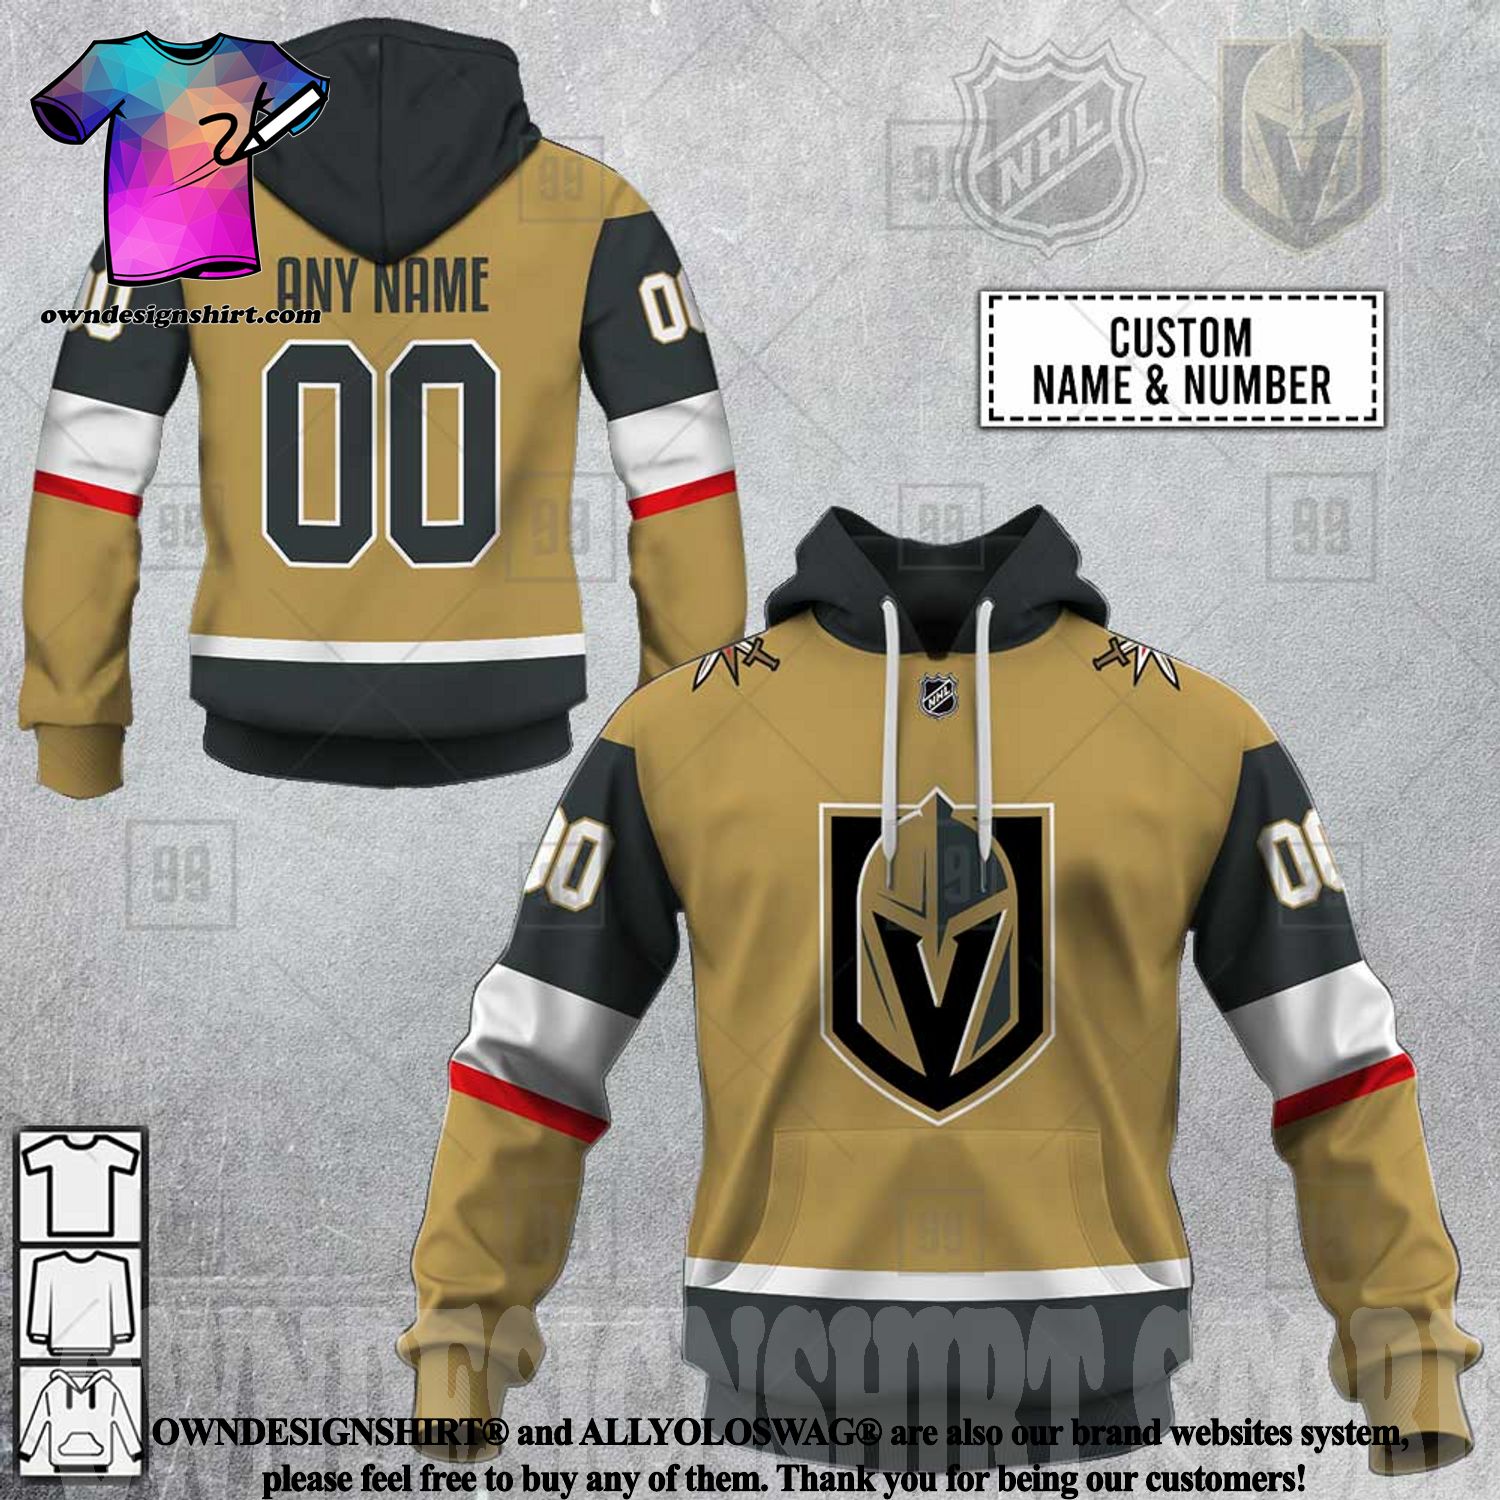 Toronto Maple Leafs NHL Hot Design Custom Name Hawaiian Shirt For Fans